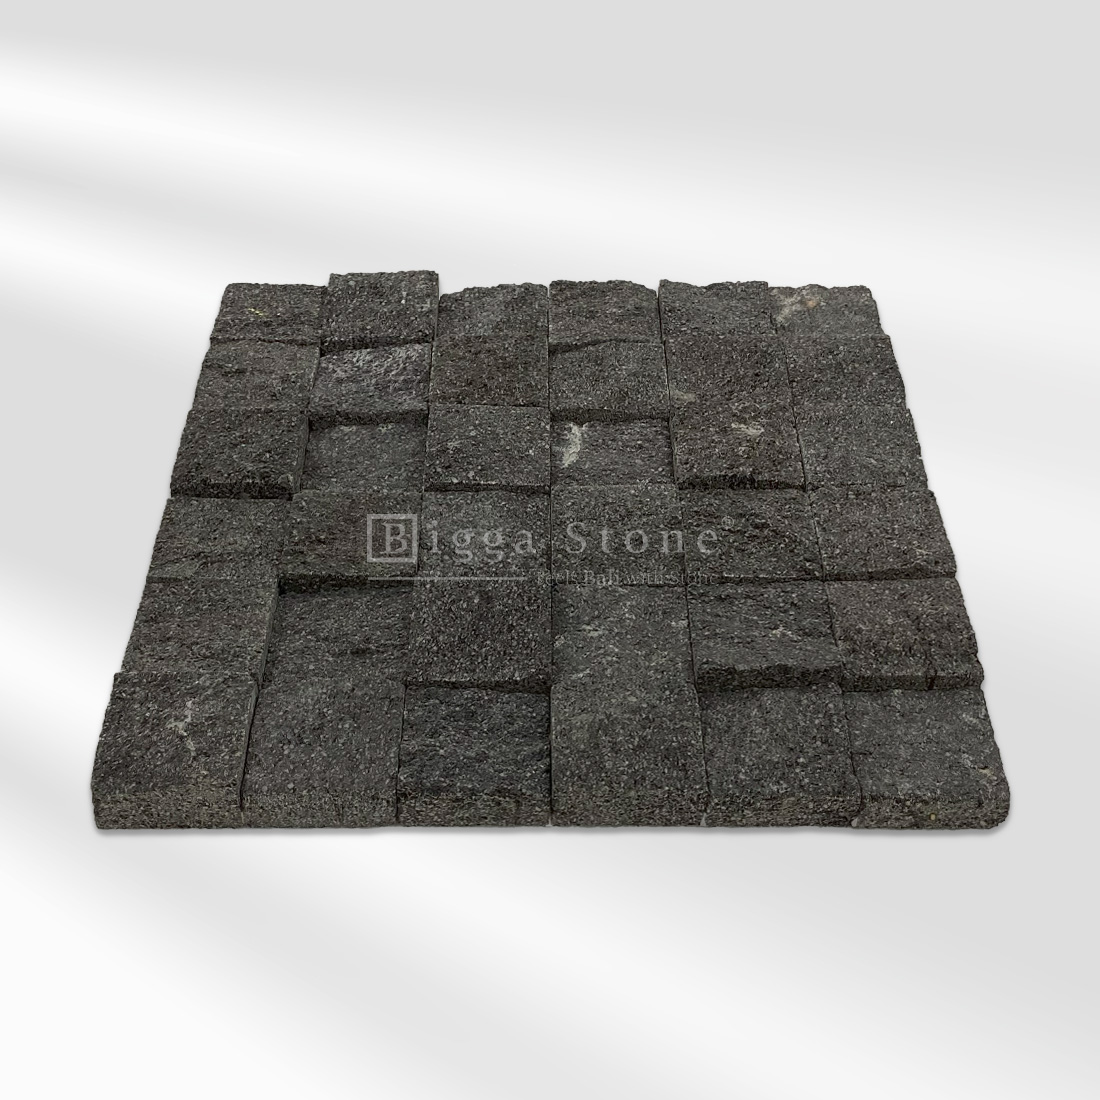 Mosaic Cubical Lava Stone by Bigga Stone